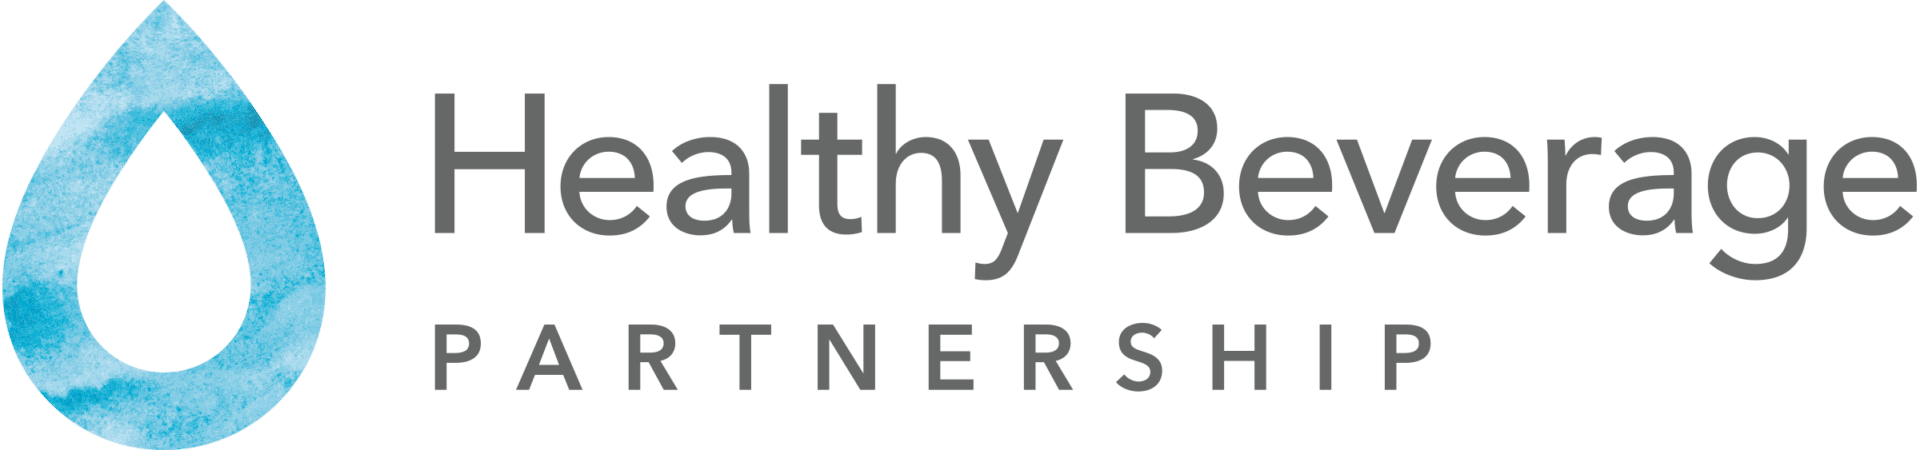 Colorado statewide Healthy Beverage Partnership